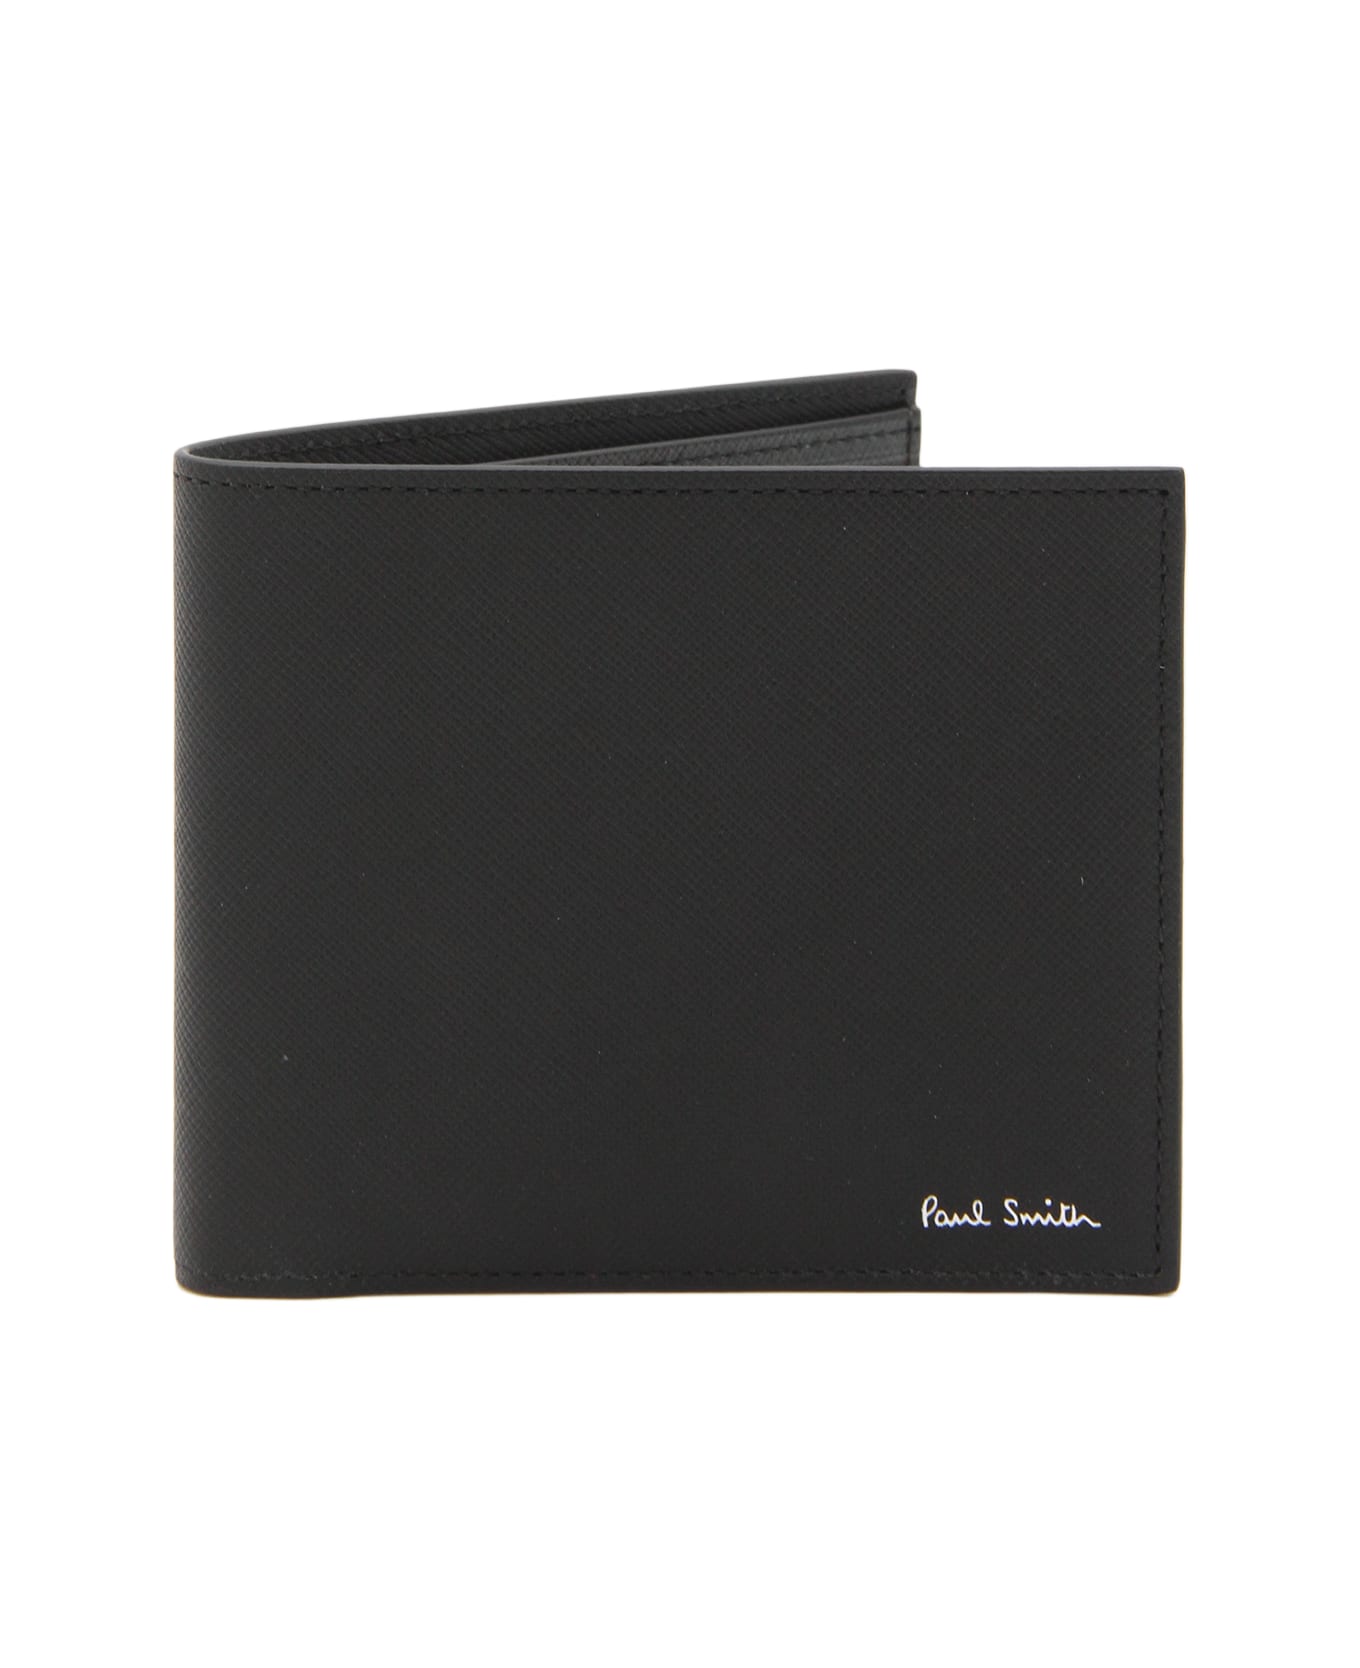 Paul Smith Black Multicolour Leather Wallet - Black